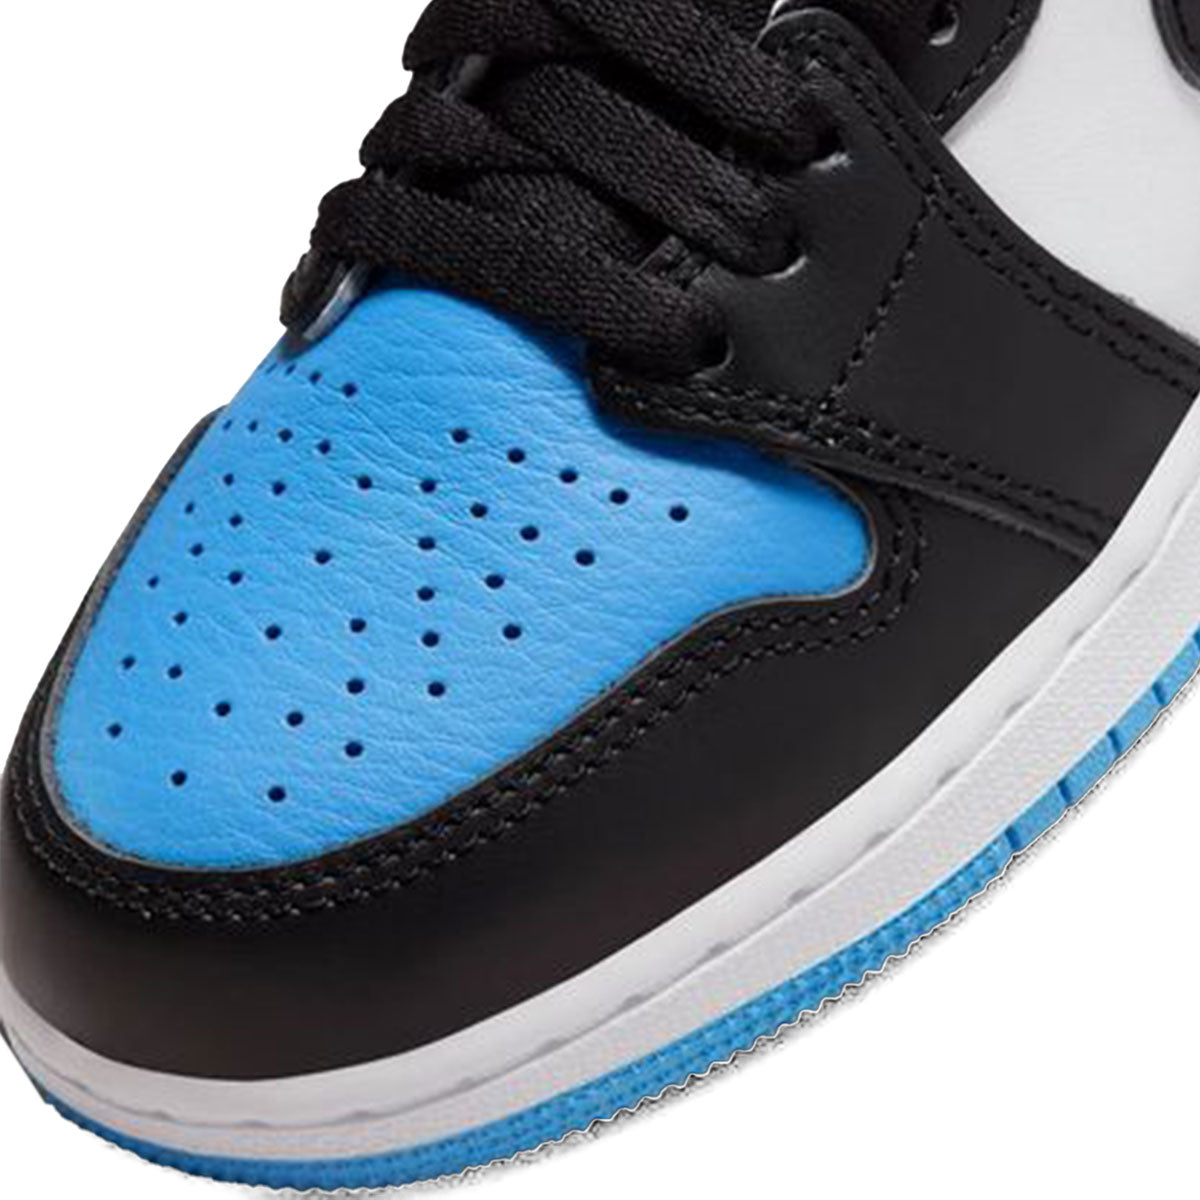 NIKE AIR JORDAN 1 RETRO HIGH OG GS UNIVERSITY BLUE / BLACK - WHITE Nike Air Jordan 1 Retro High OG GS "University Blue / Black - White" [FD1437-400]